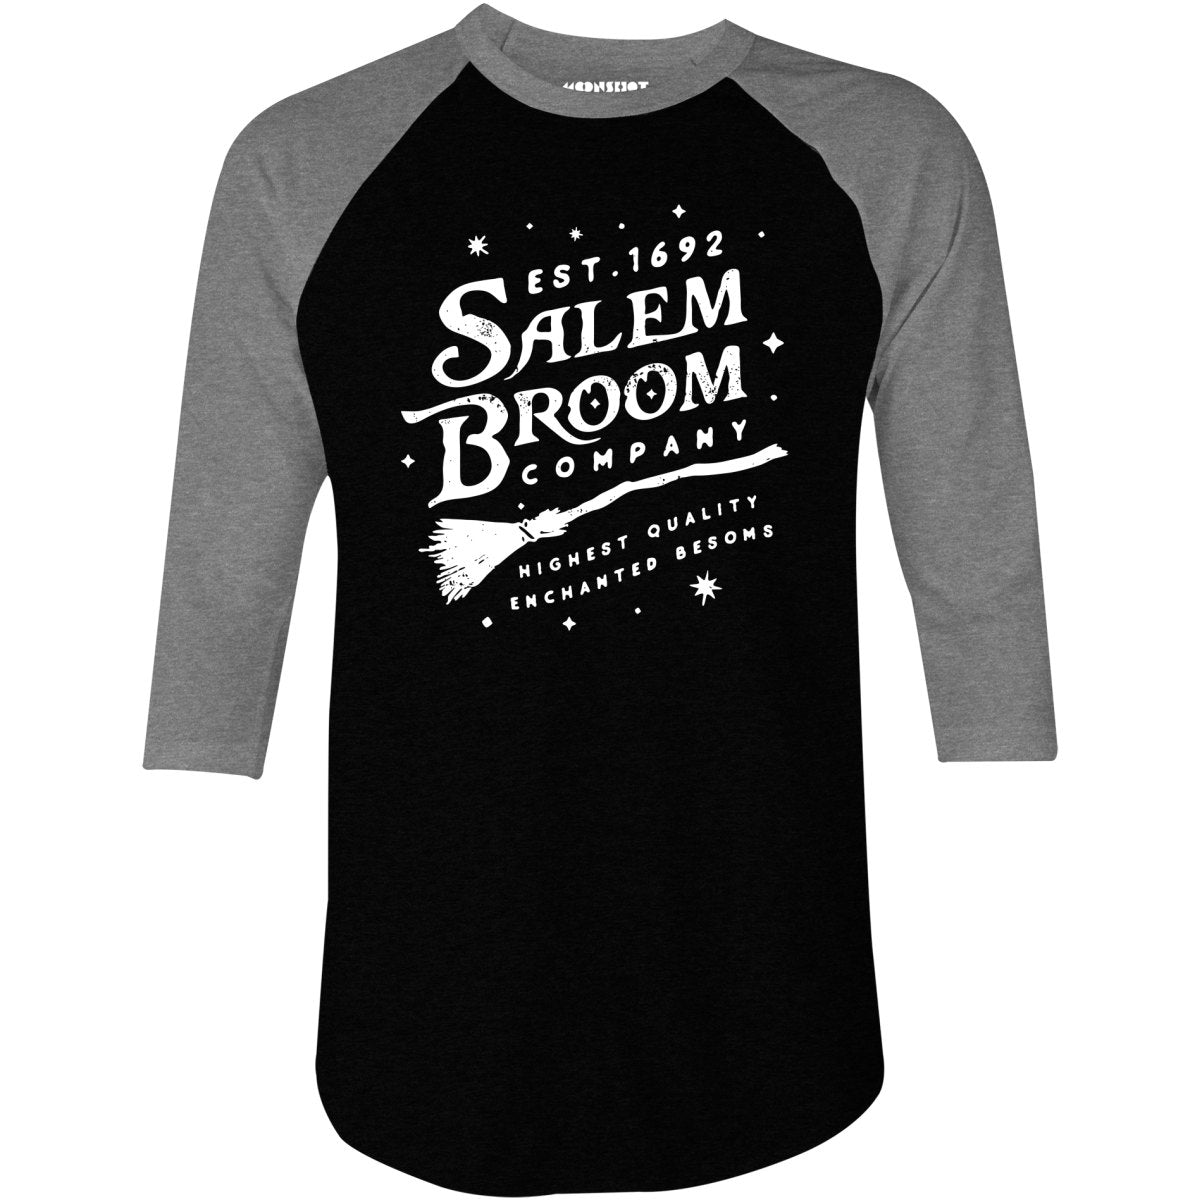 Salem Broom Company - 3/4 Sleeve Raglan T-Shirt